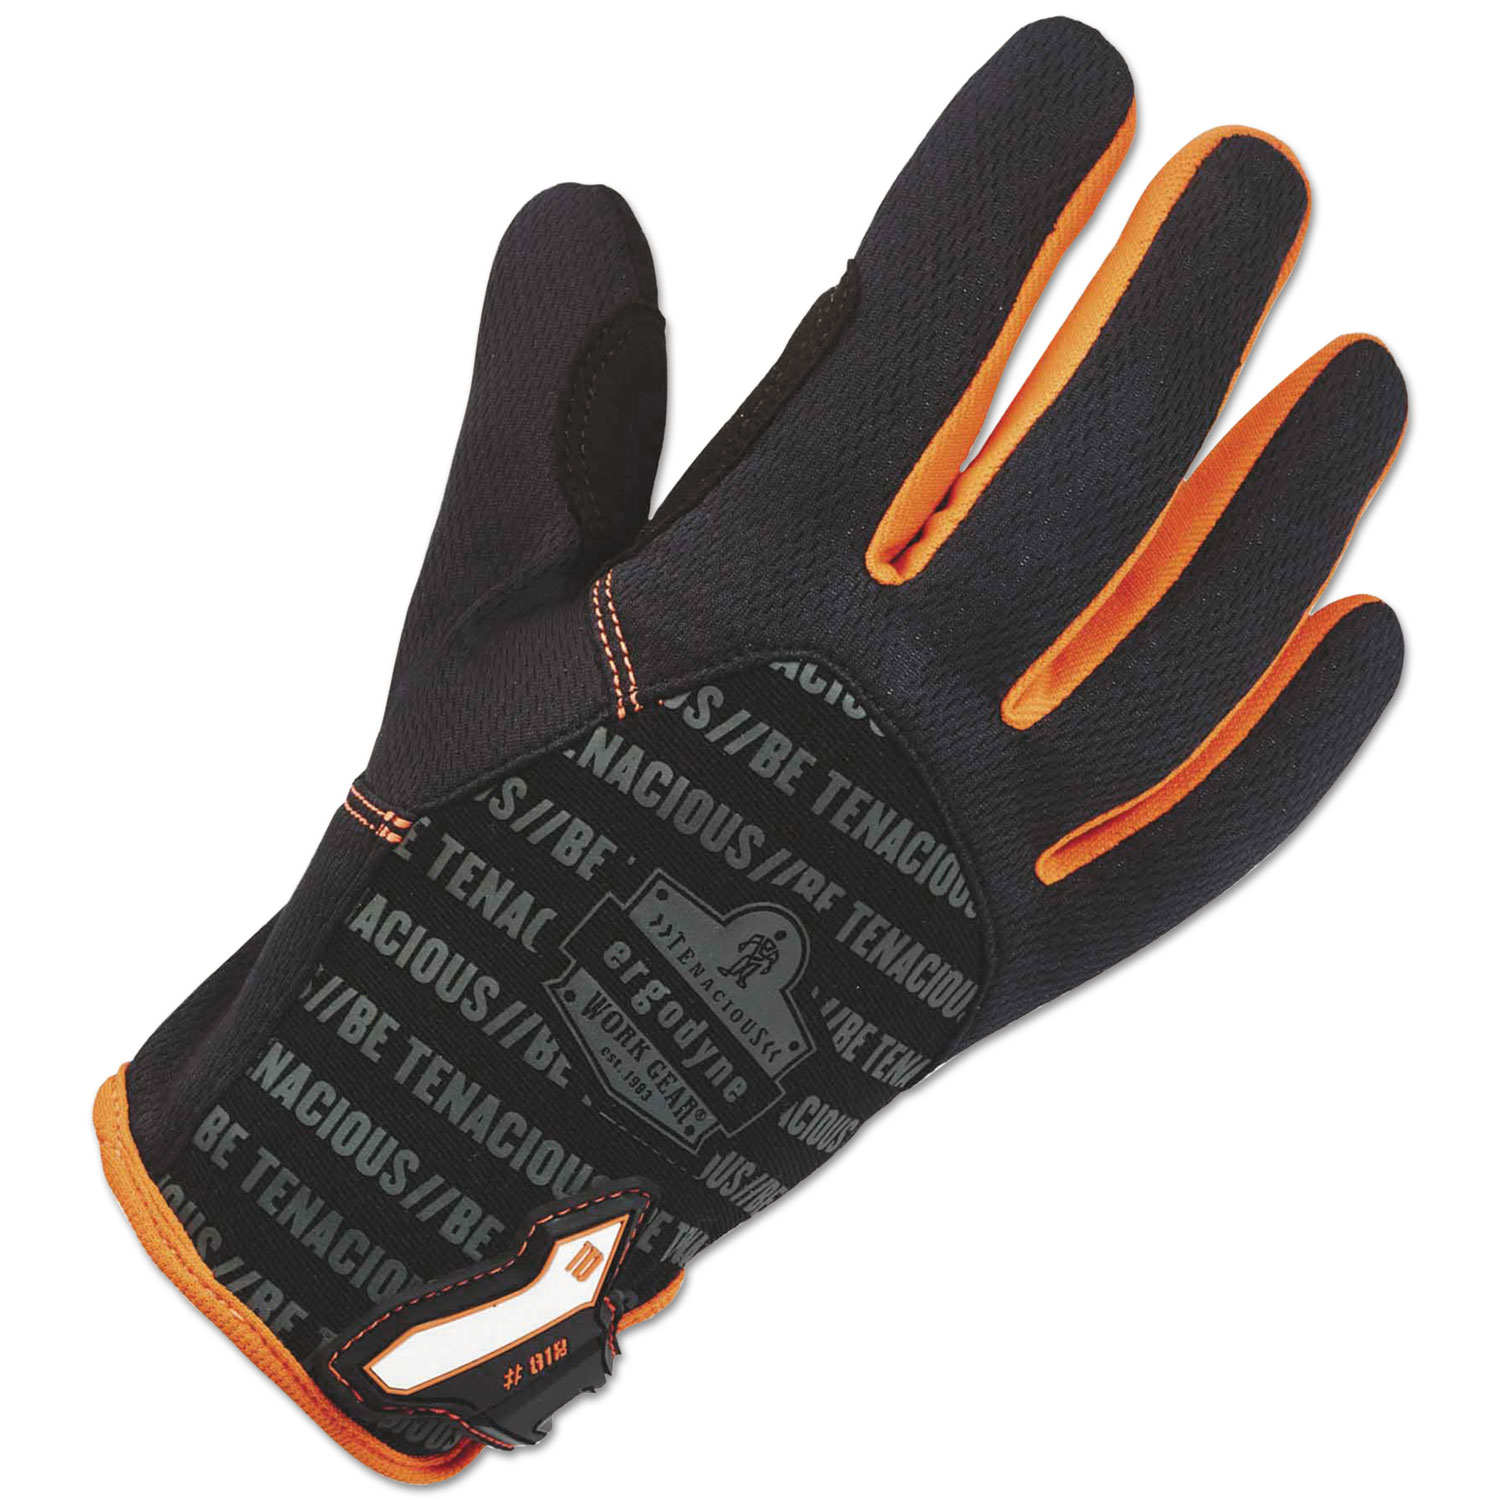  ergodyne 17175 ProFlex 812 Standard Utility Gloves, Black, X-Large, 1 Pair (EGO17175) 